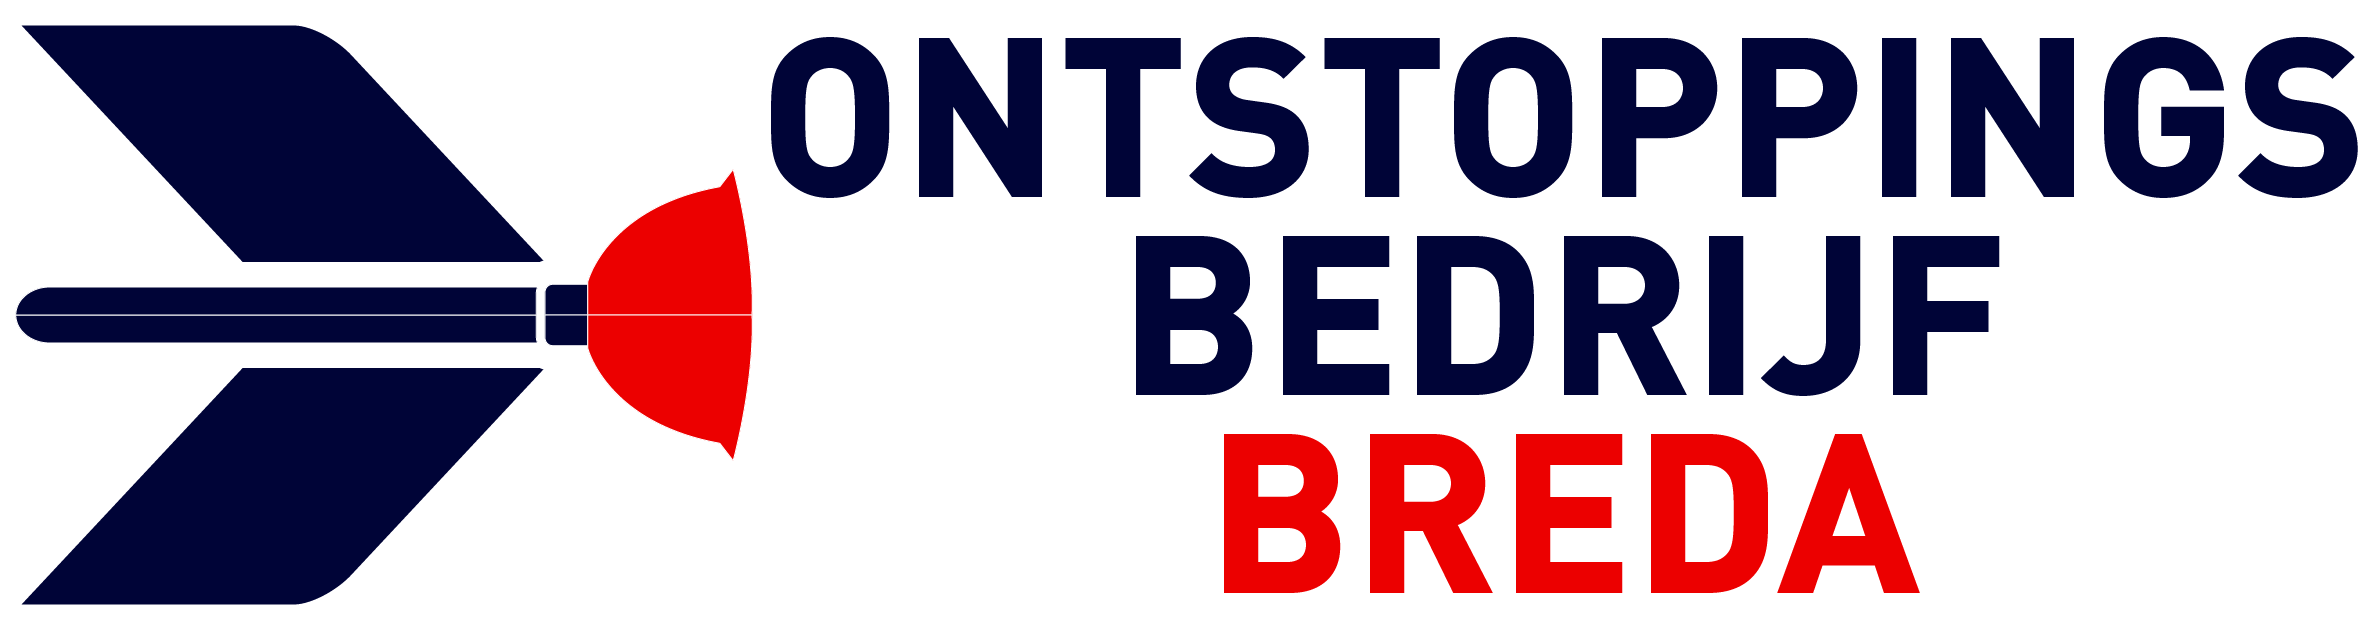 Ontstoppingsbedrijf Breda logo